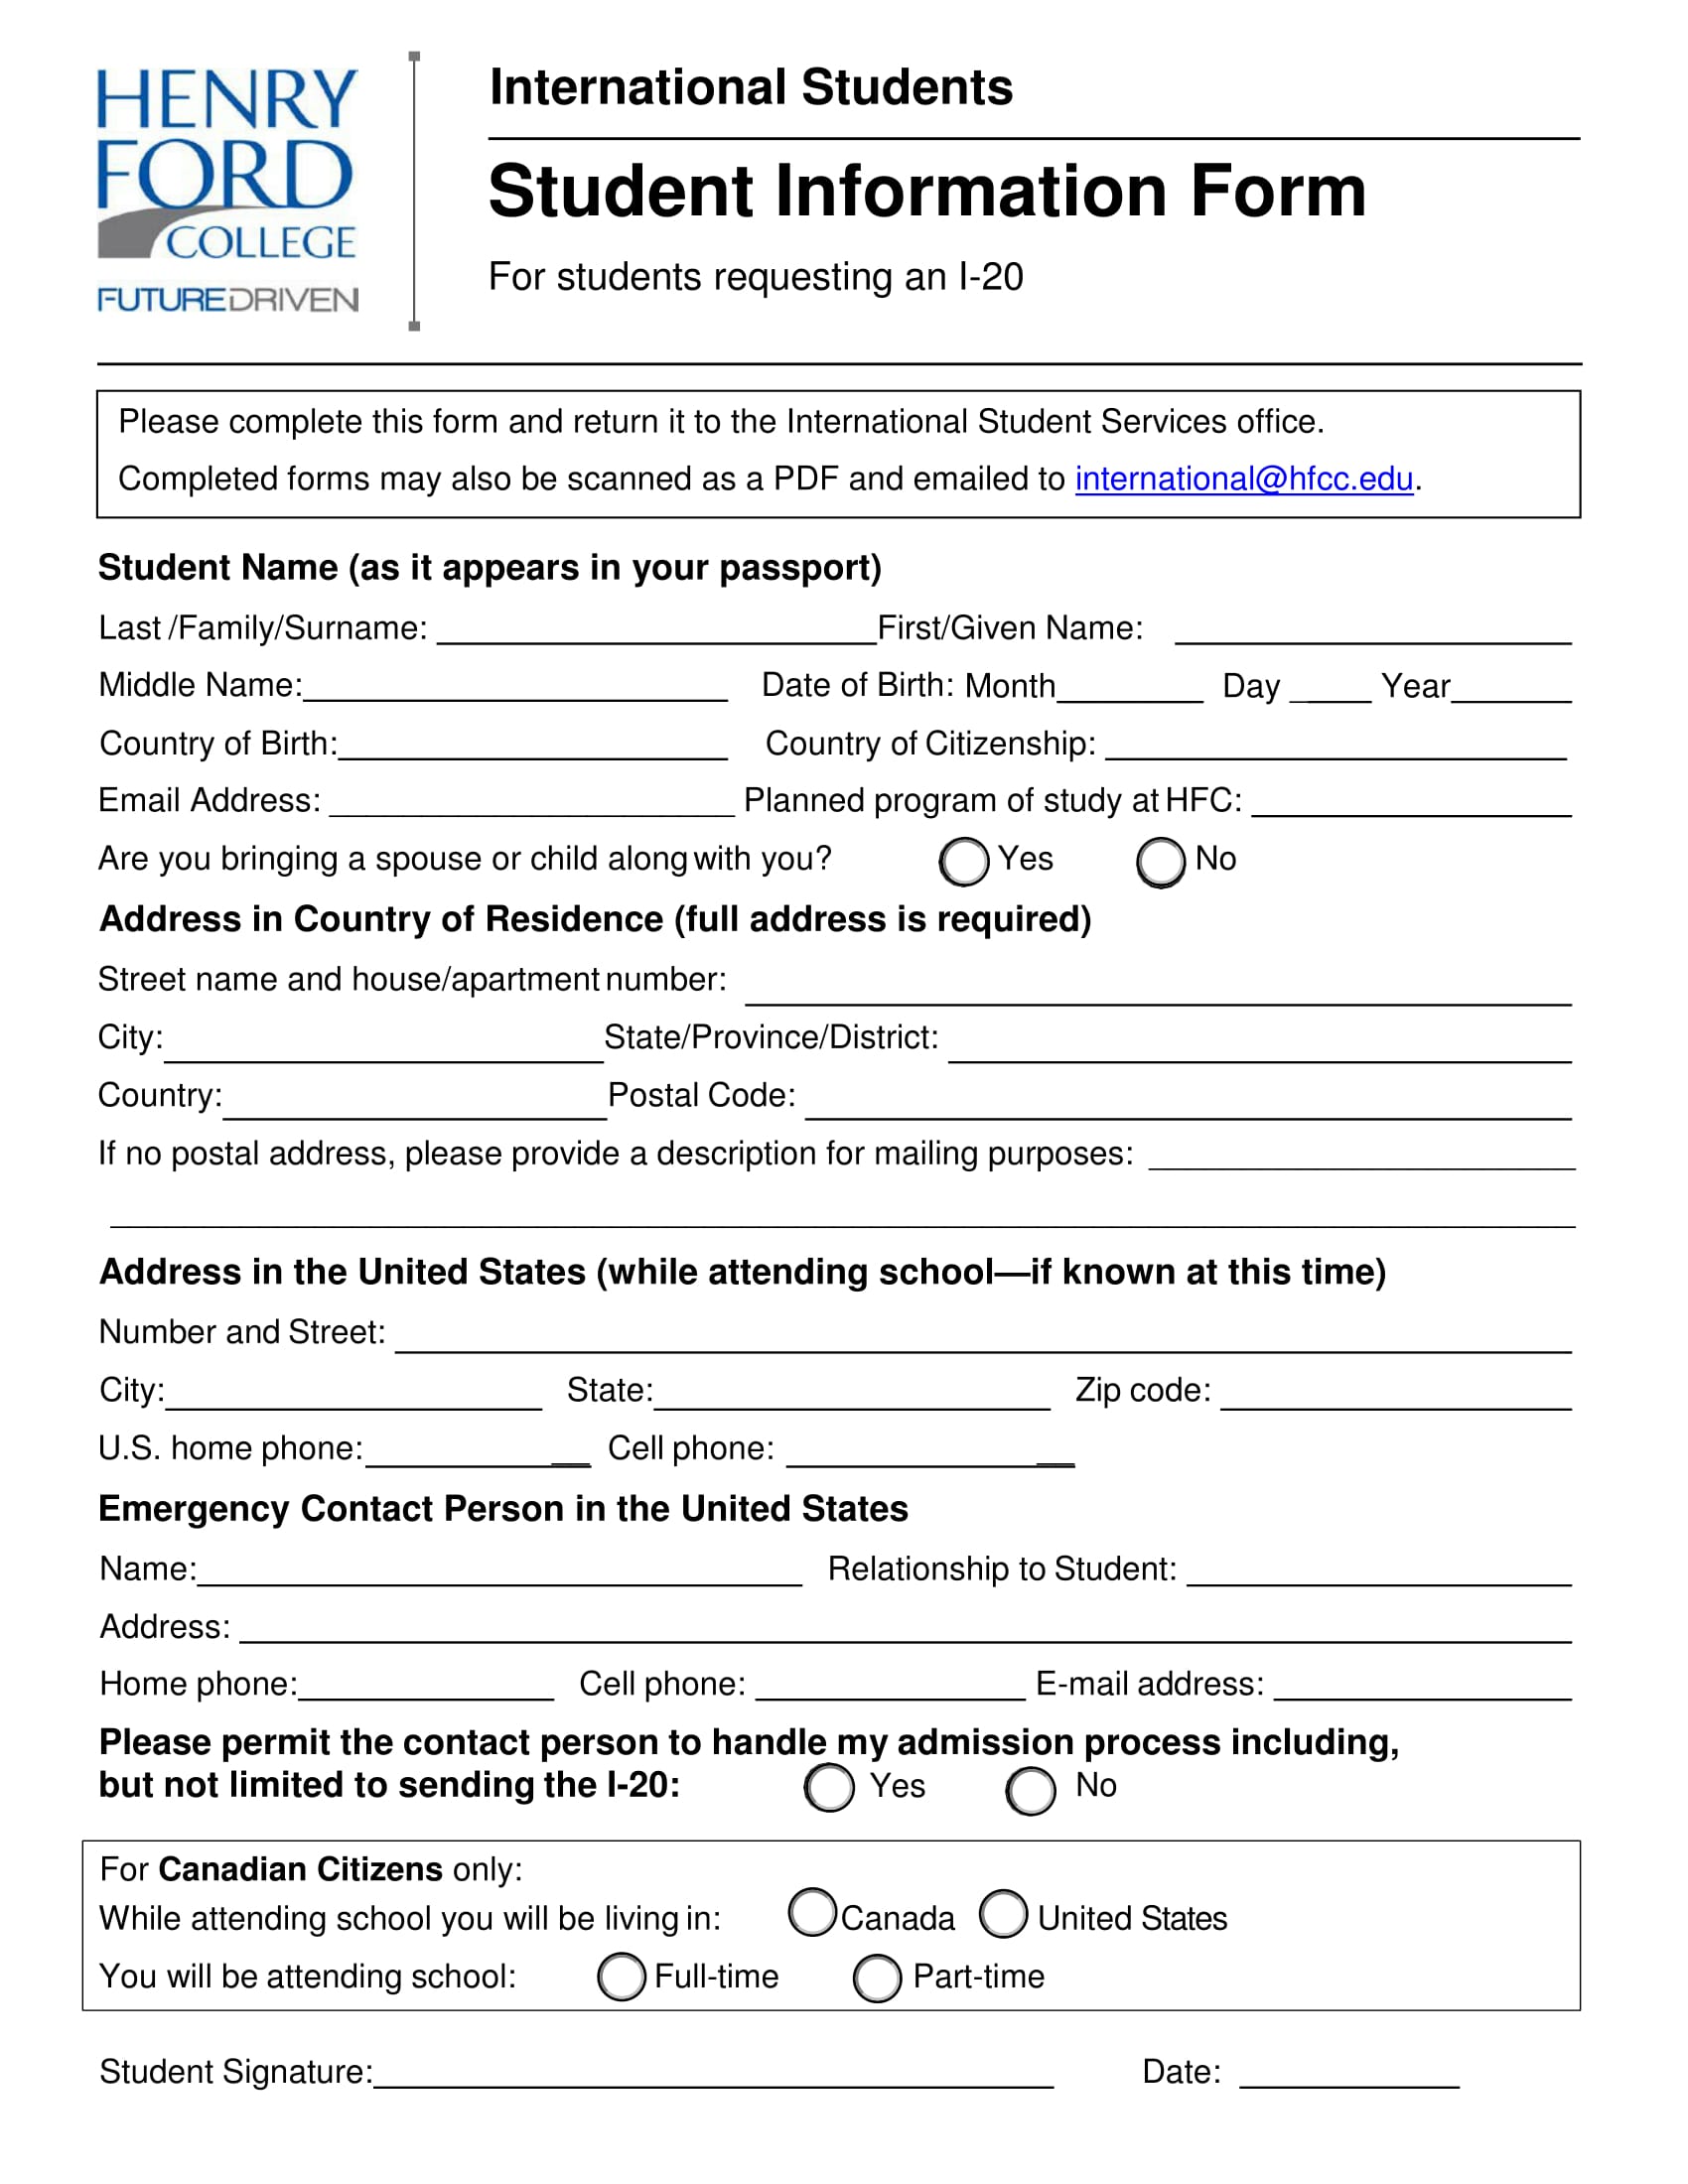 international students’ information form 1